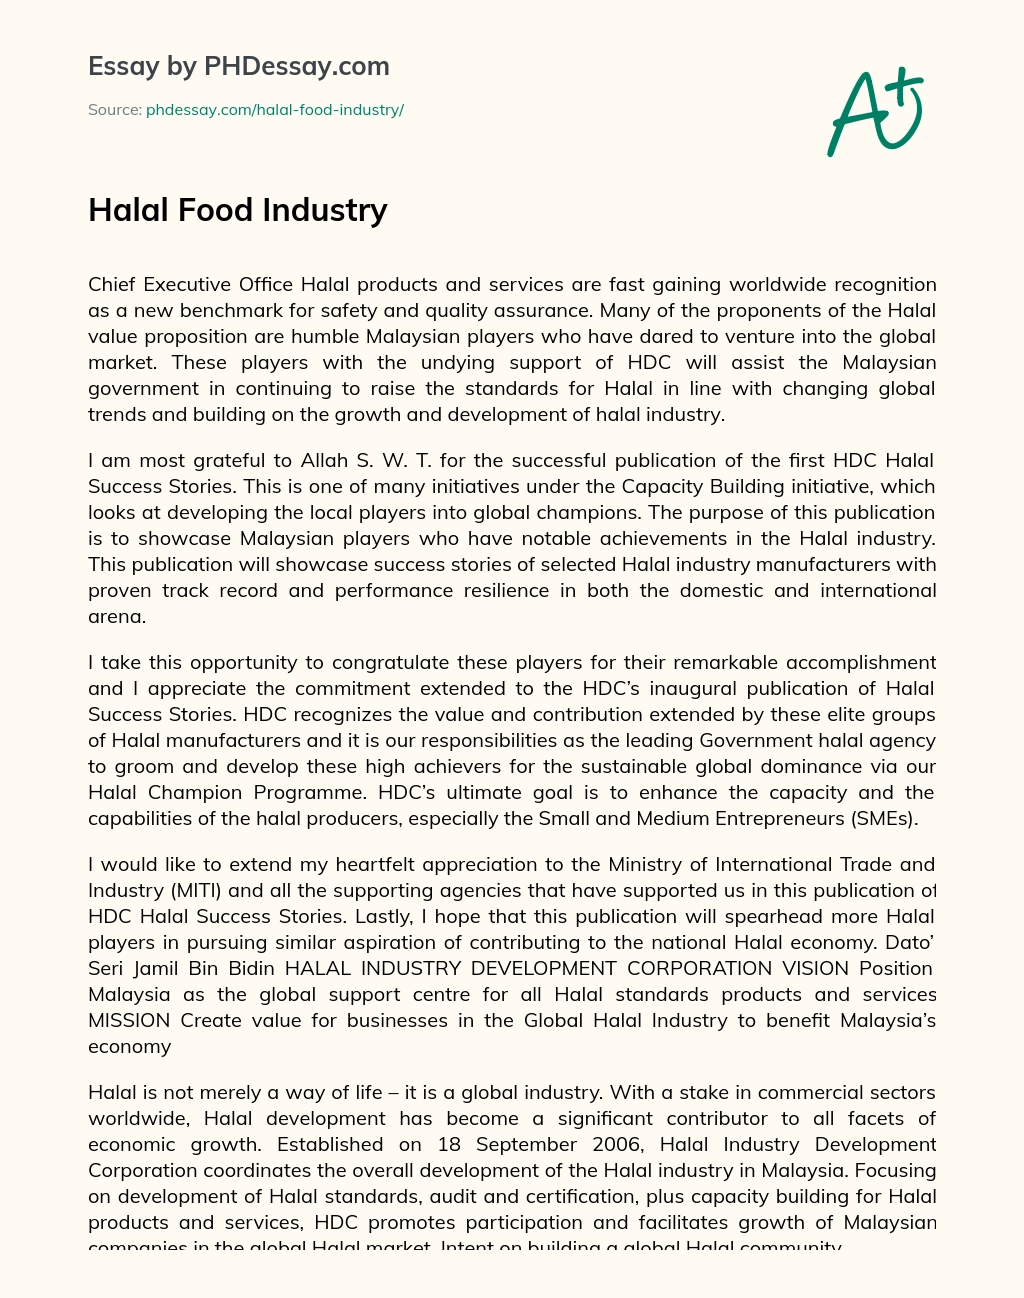 Halal Food Industry essay